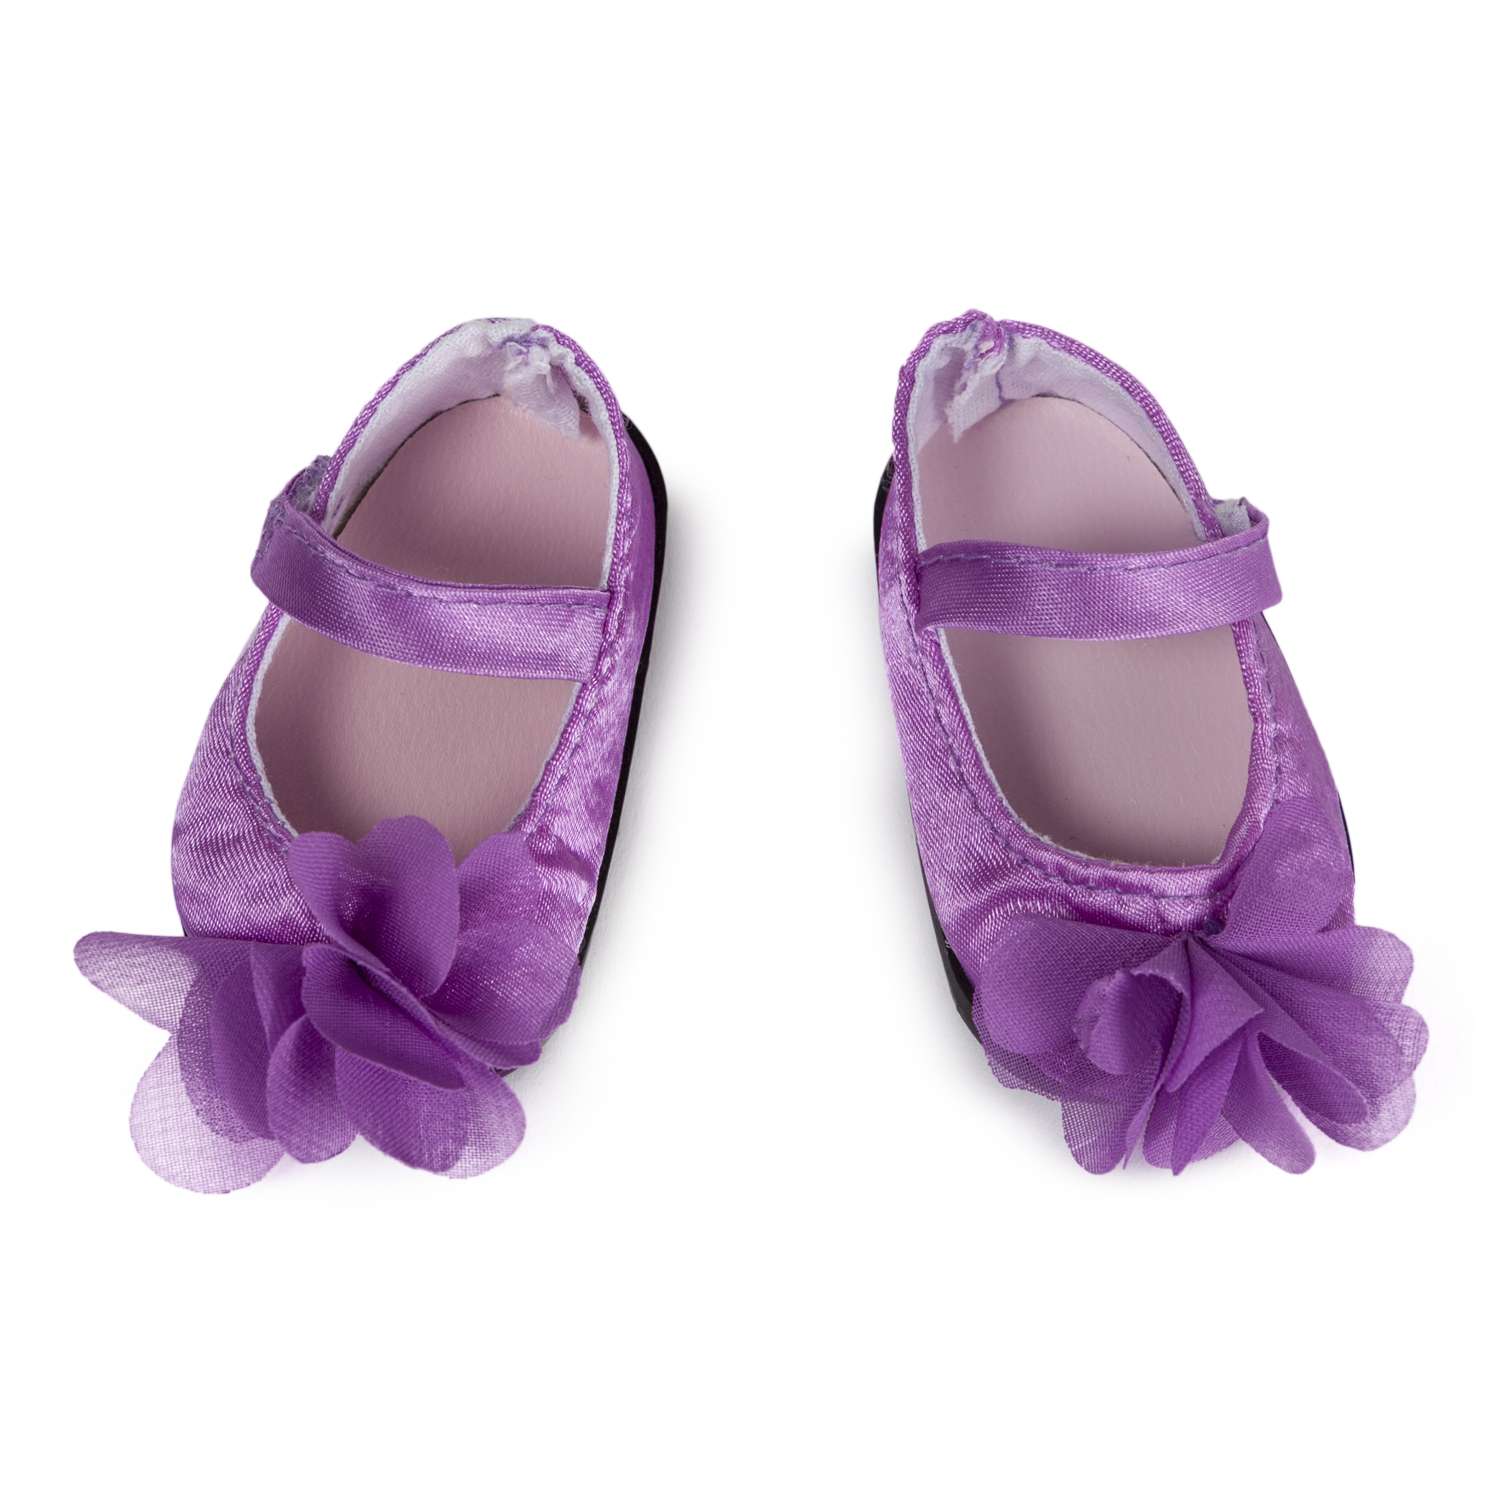 Обувь для куклы Demi Star туфли в ассортименте 6305B - фото 4